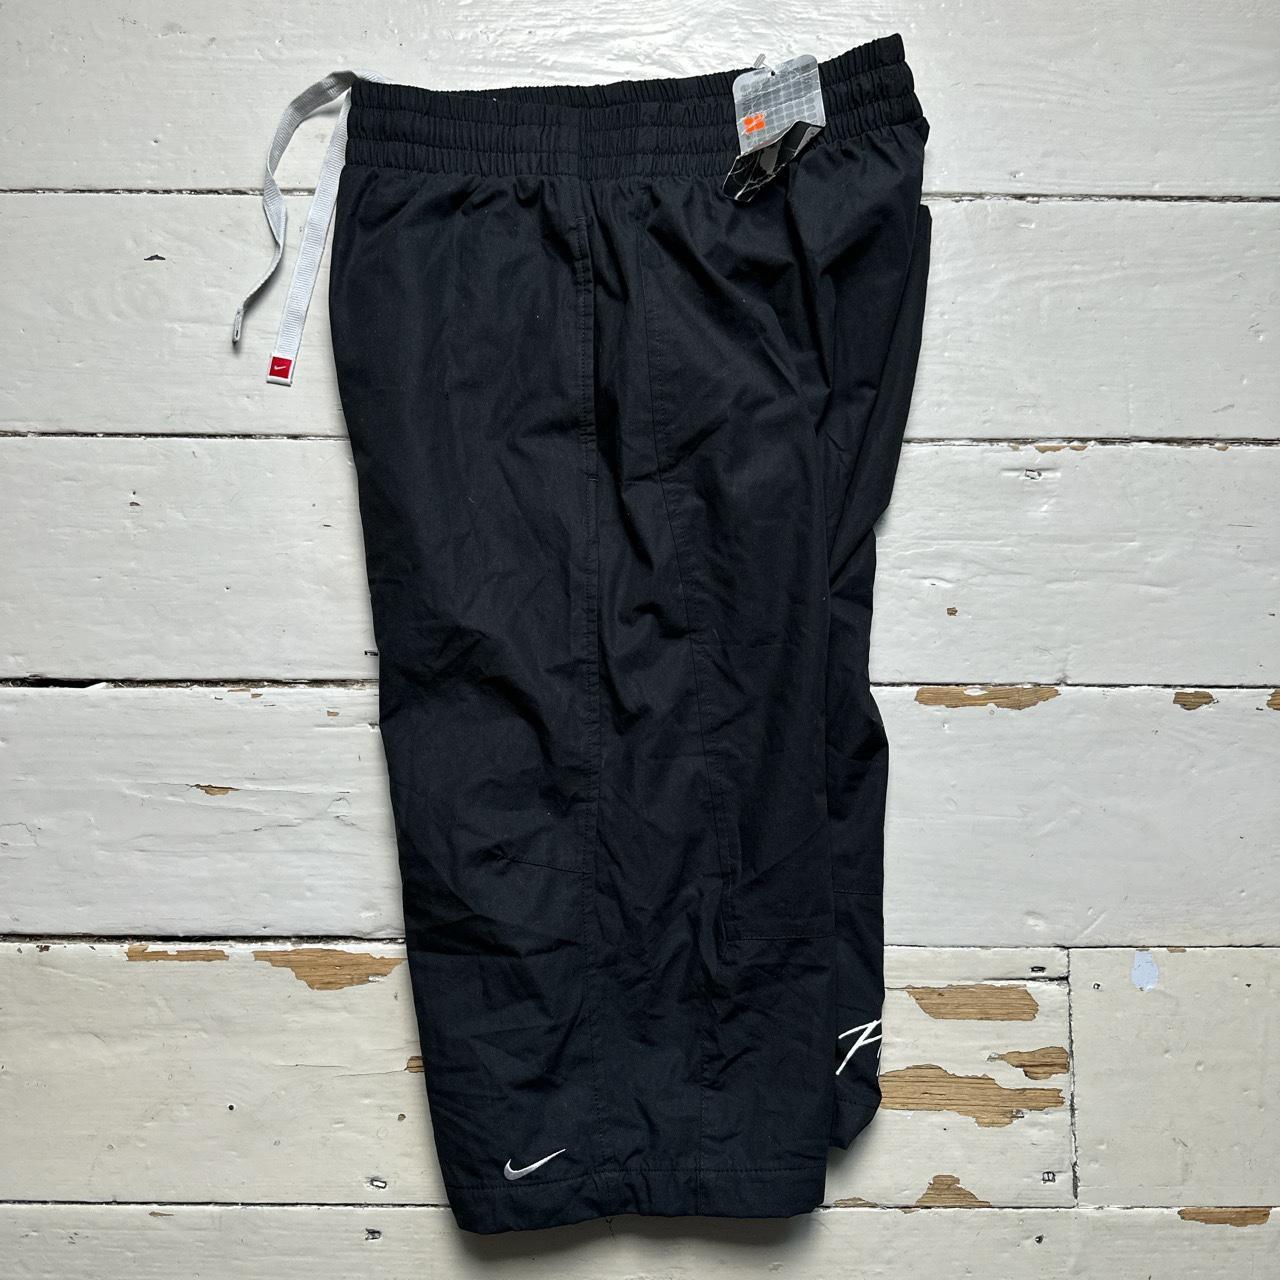 Nike Air Flight Black and White Shell Track Pant Shorts